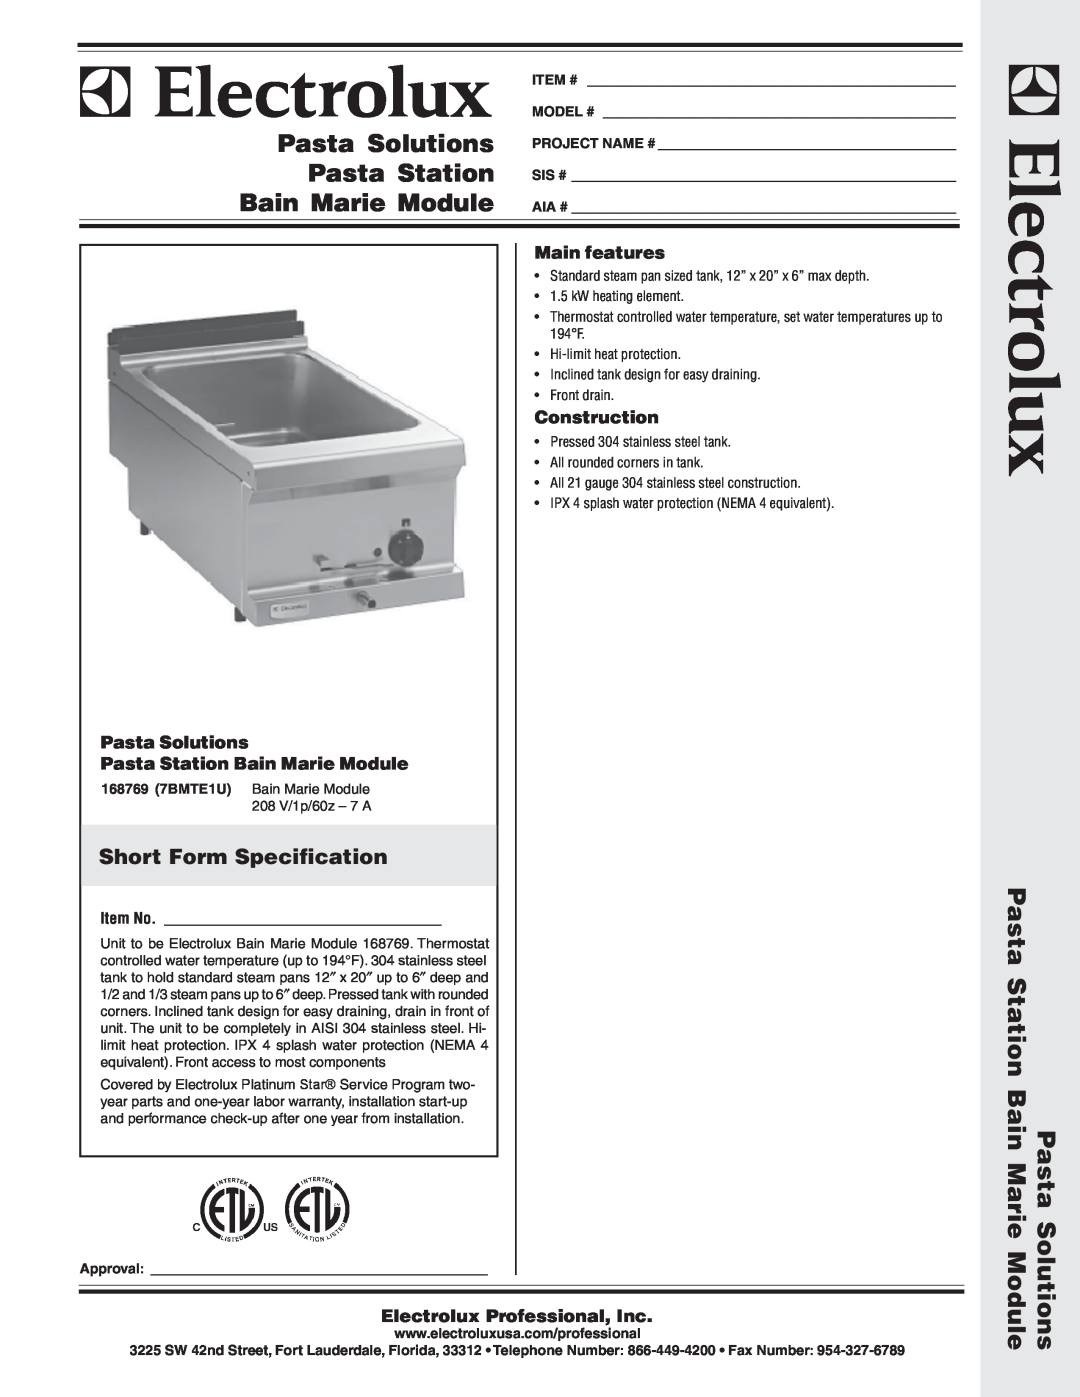 Electrolux 168769 (7BMTE1U) warranty Short Form Specification, Pasta Solutions Pasta Station Bain Marie Module 